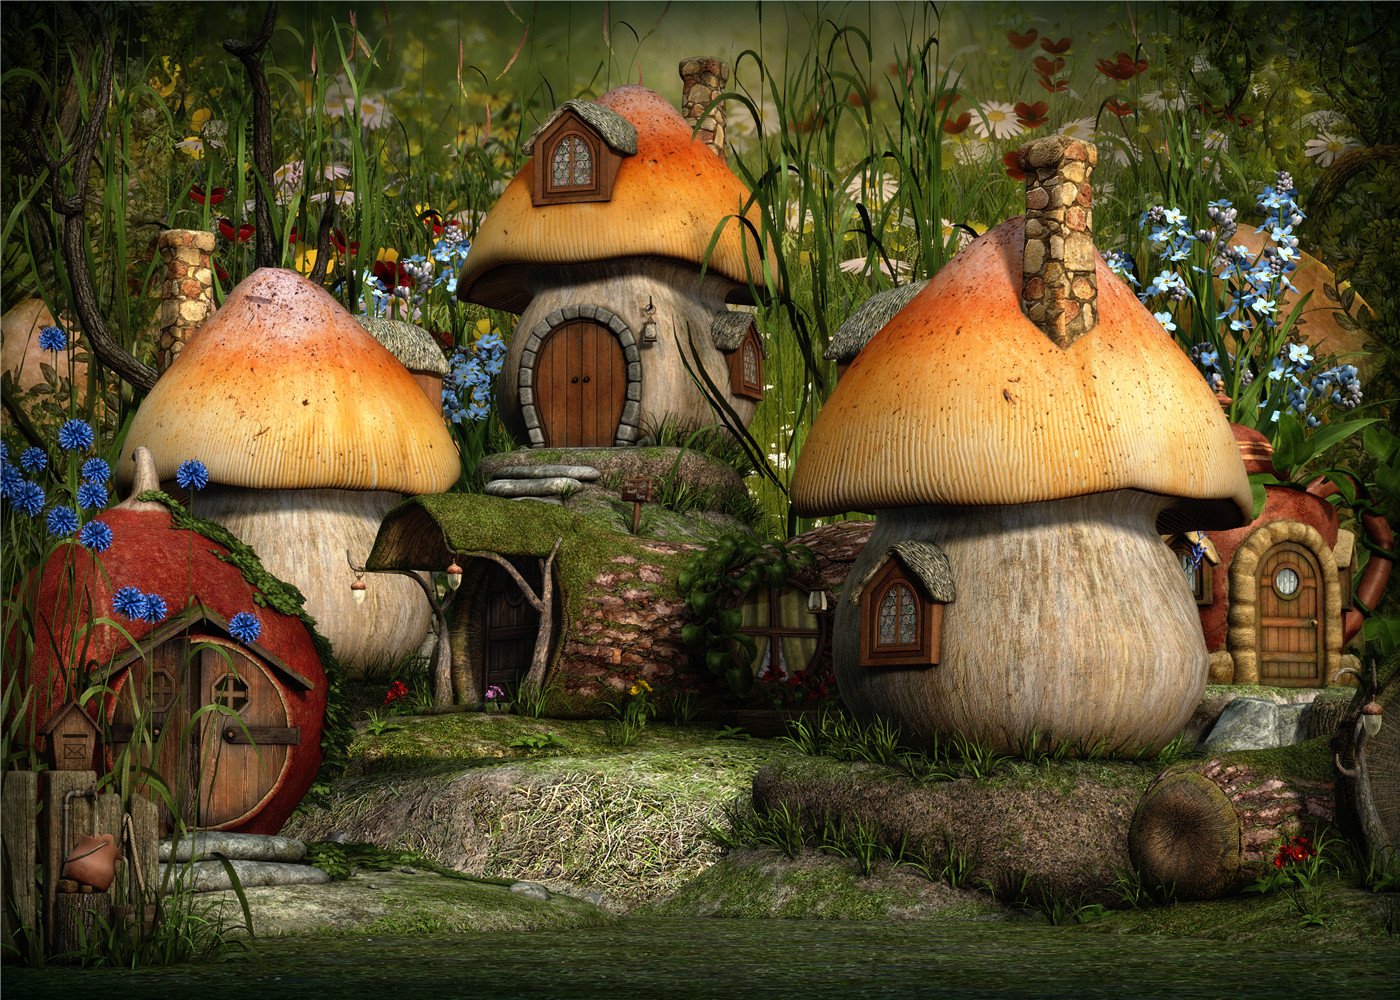 Katebackdrop：Kate Mushroom Fantasy Forest  Backdrop for Children Photography